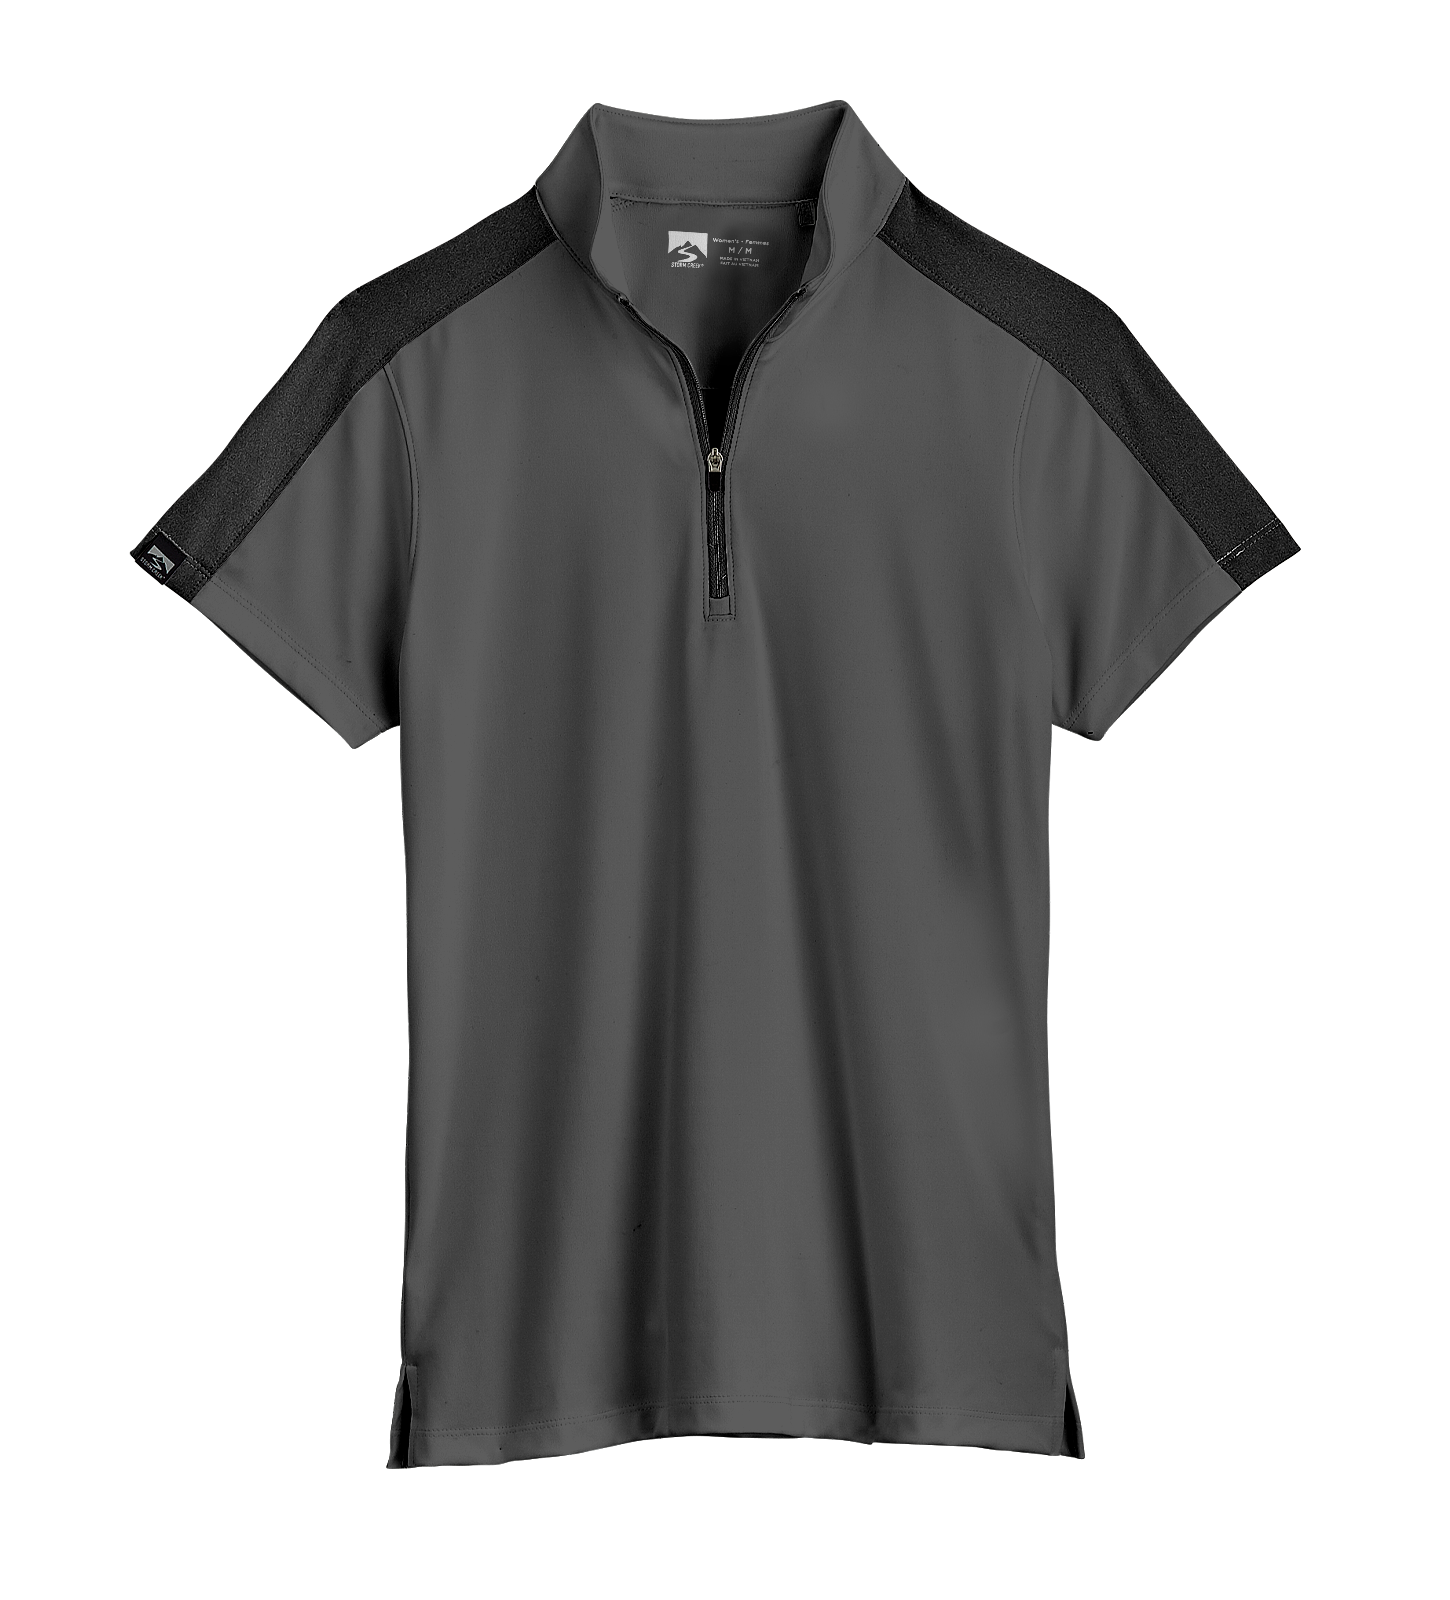 Storm Creek Activator Short-Sleeve Polo Shirt for Ladies - Dark Heather Gray/Black - L